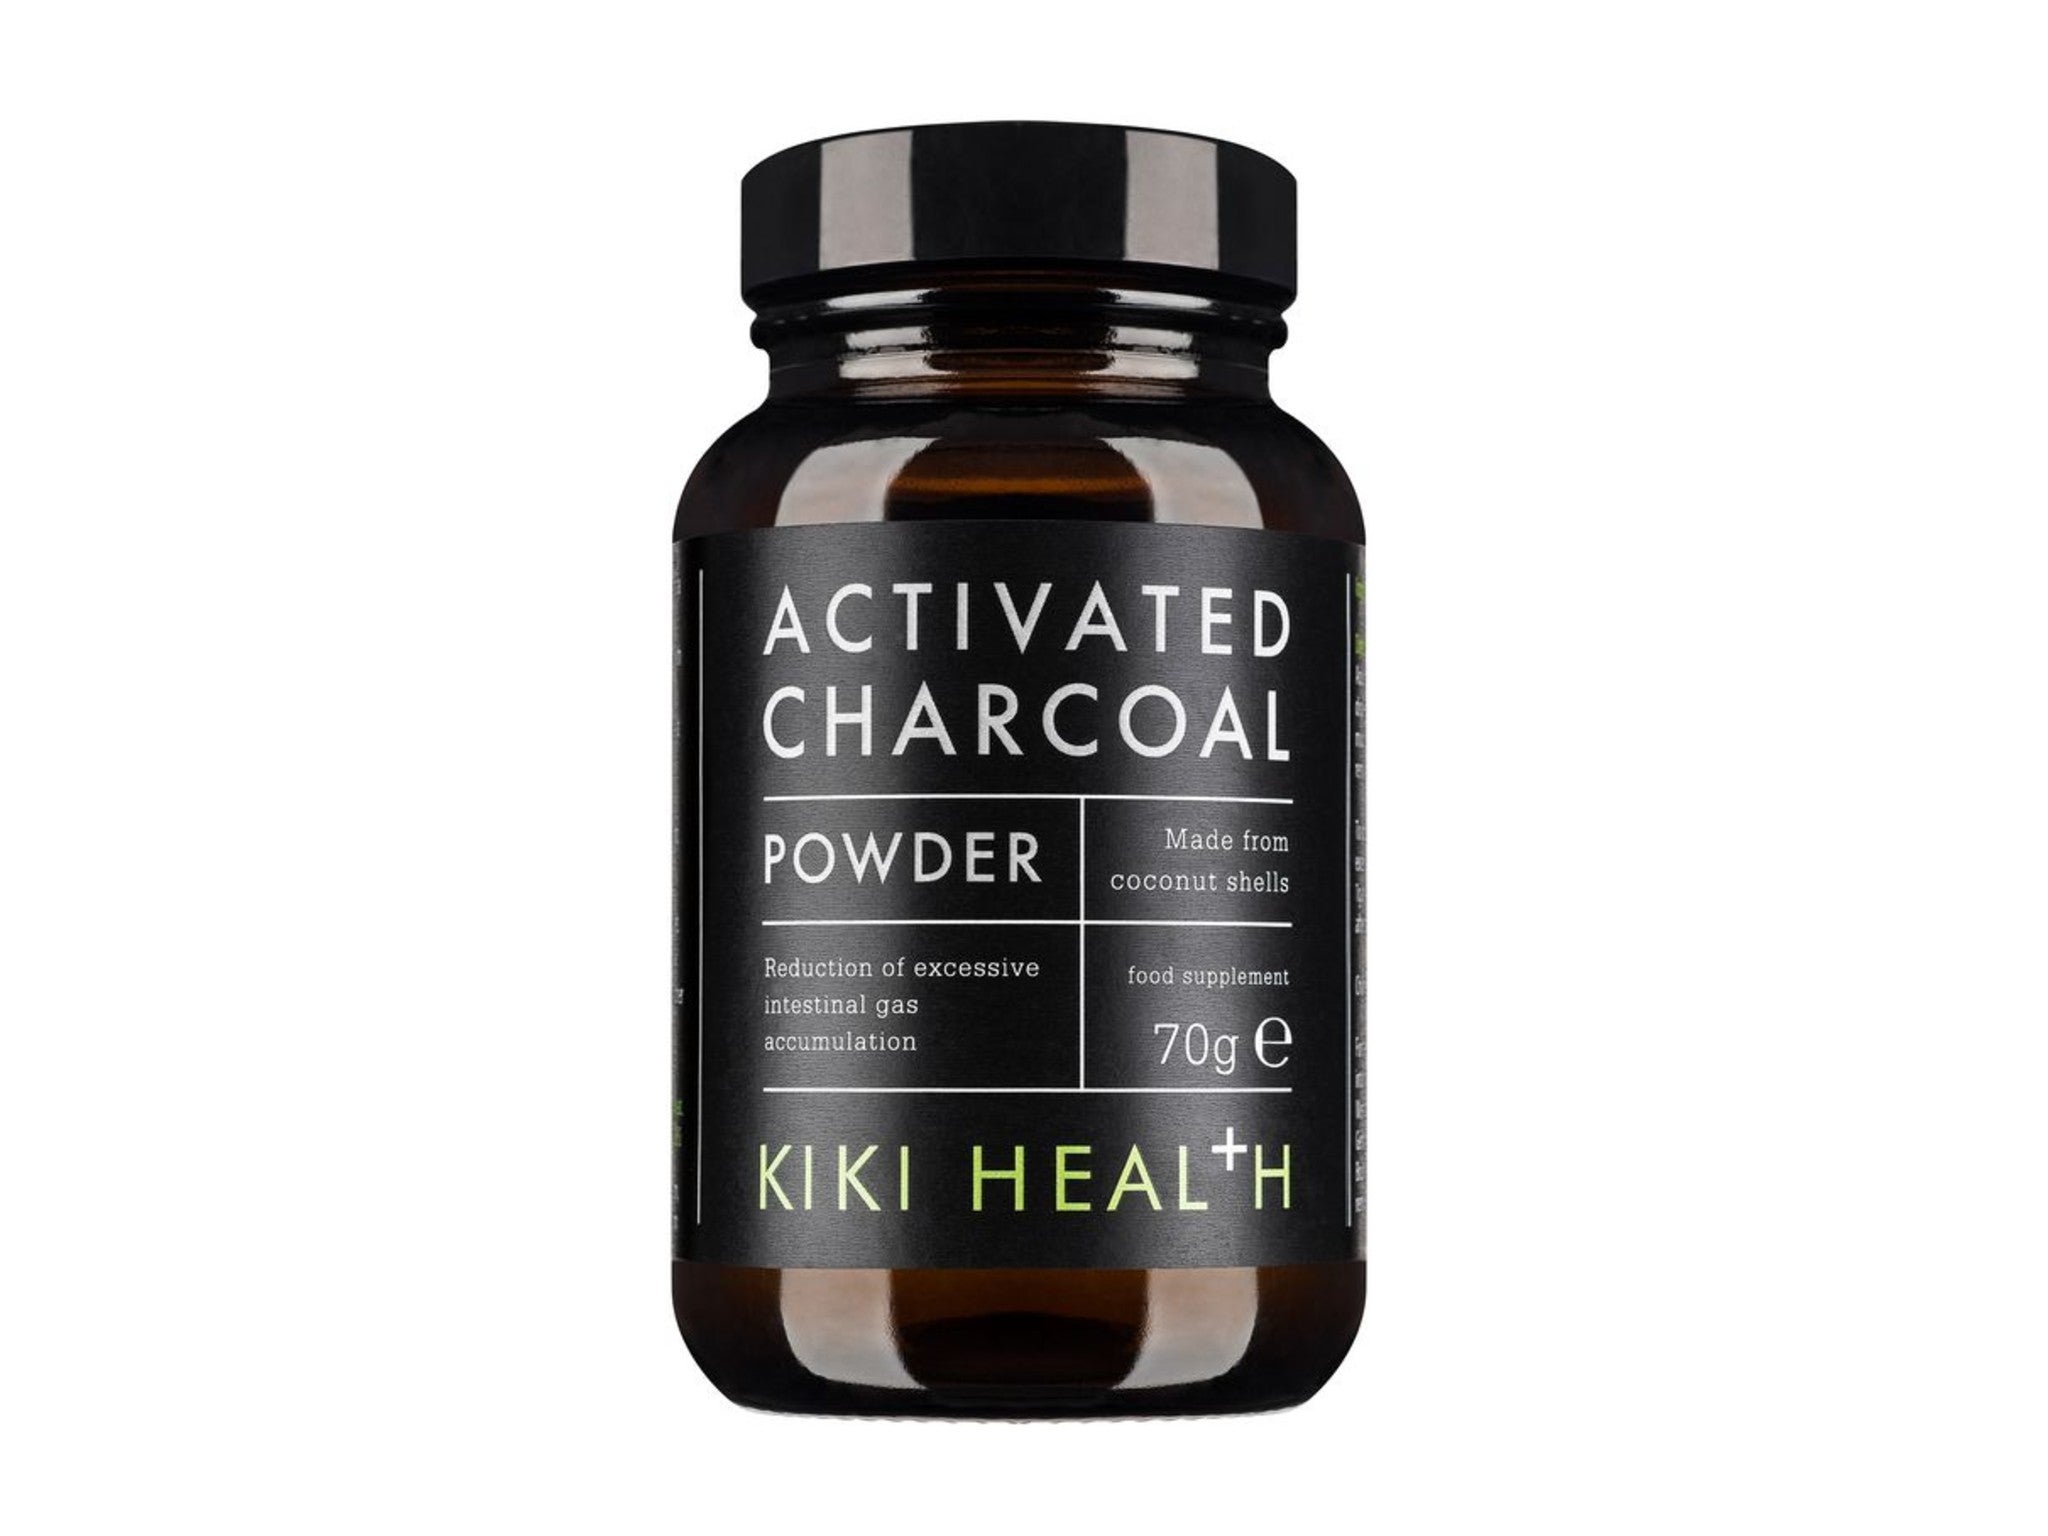 _Kiki Health activated charcoal powder indybest.jpeg